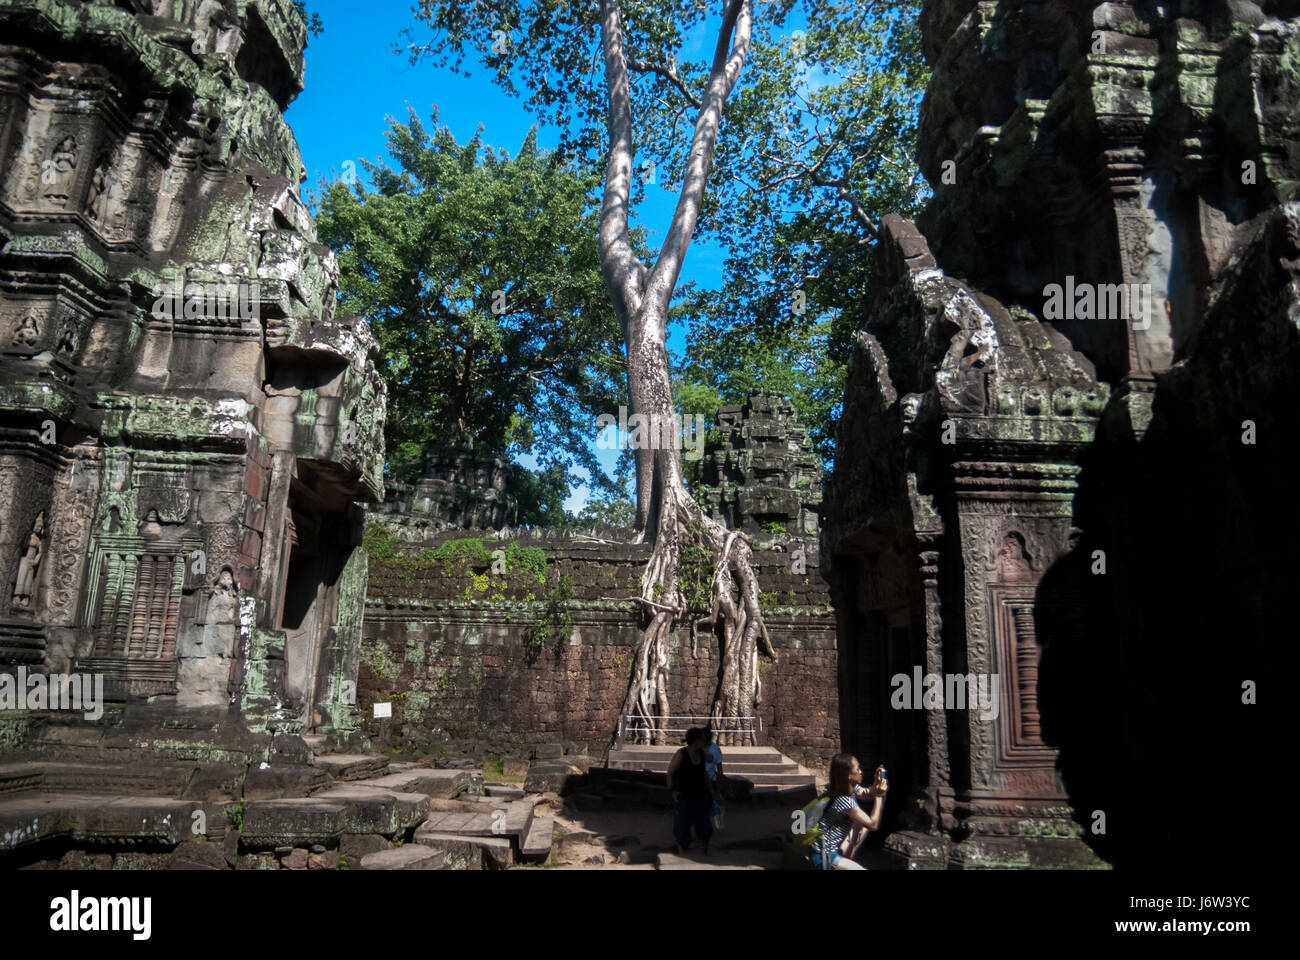 Ein Seide – Baumwolle Baum wächst an der Wand des Tempels Preah Khan in Siem Reap, Kambodscha. Stockfoto